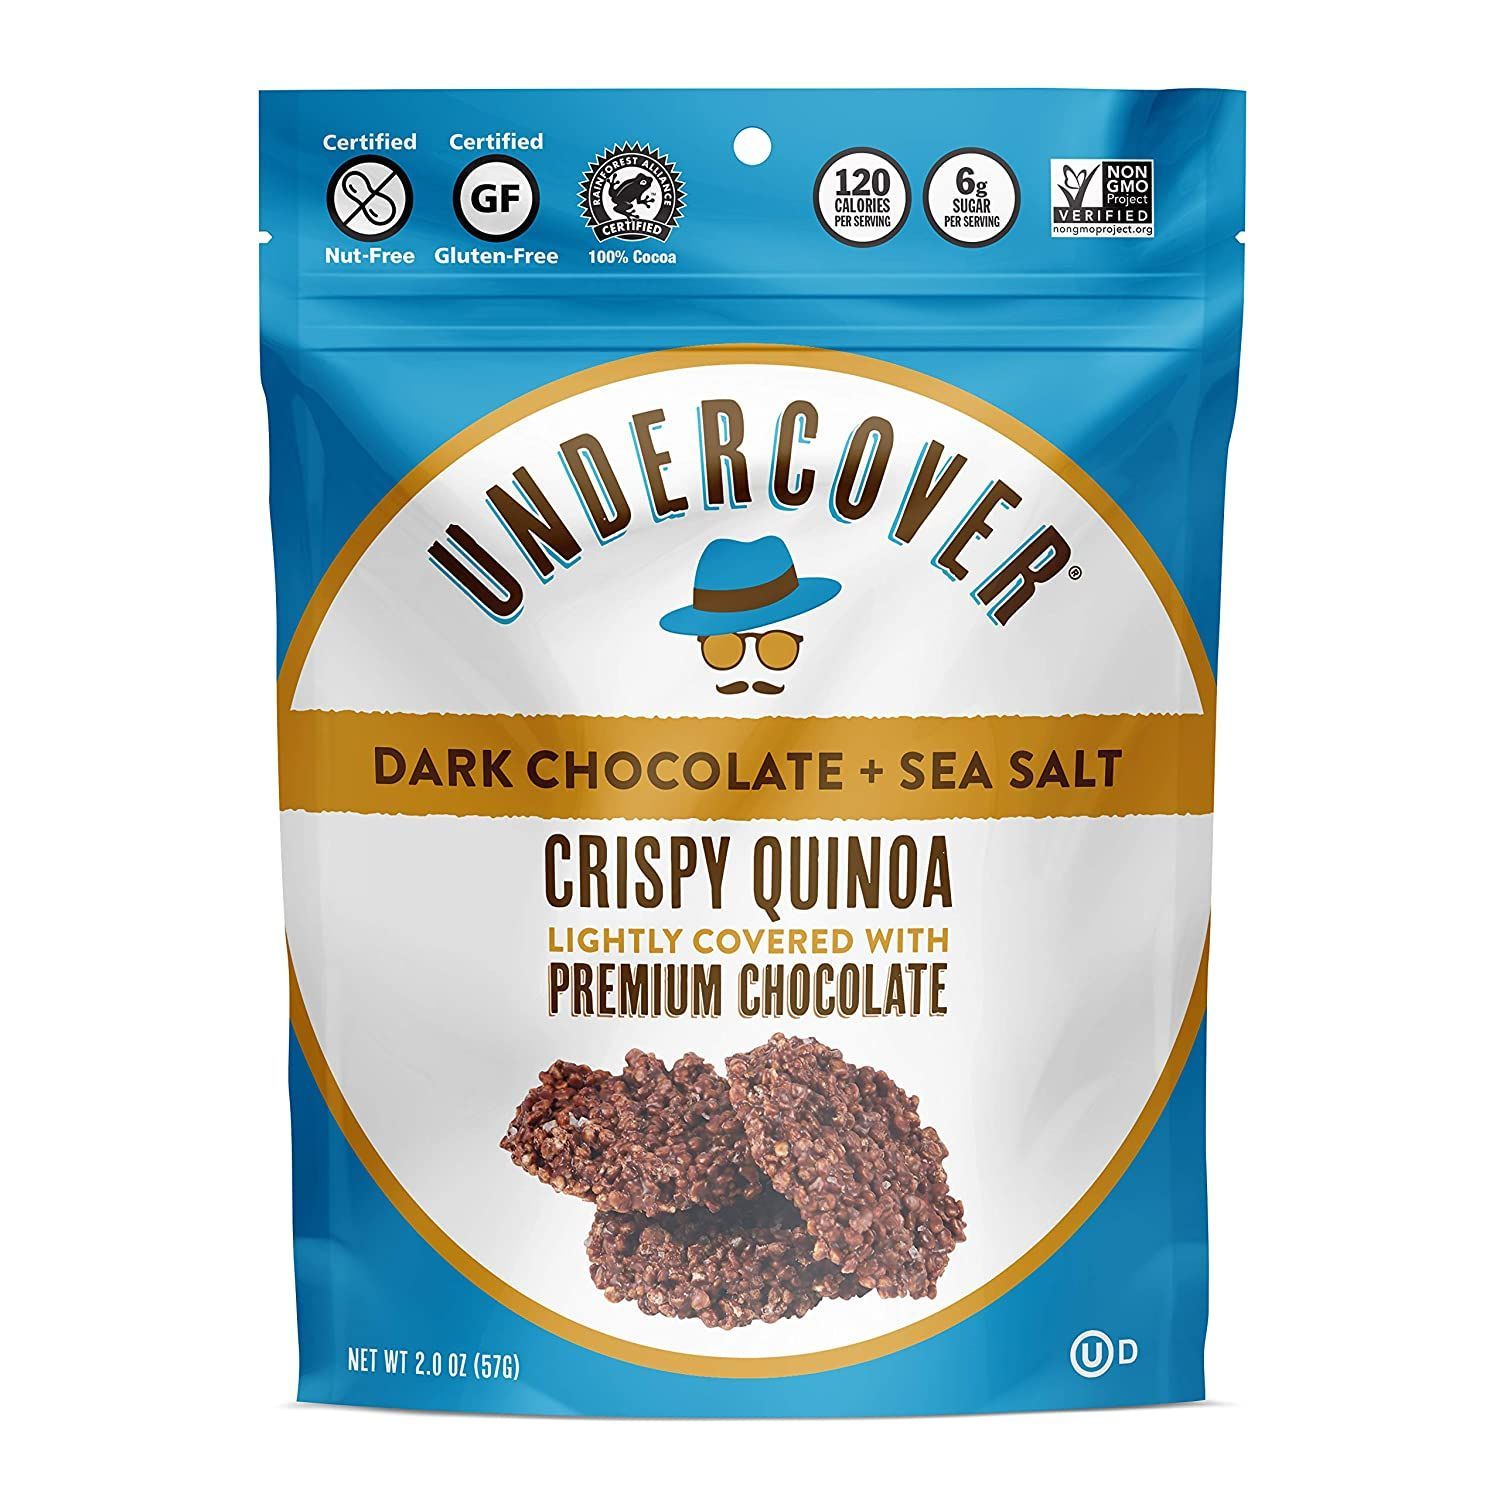 Dark Chocolate and Sea Salt Crispy Quinoa